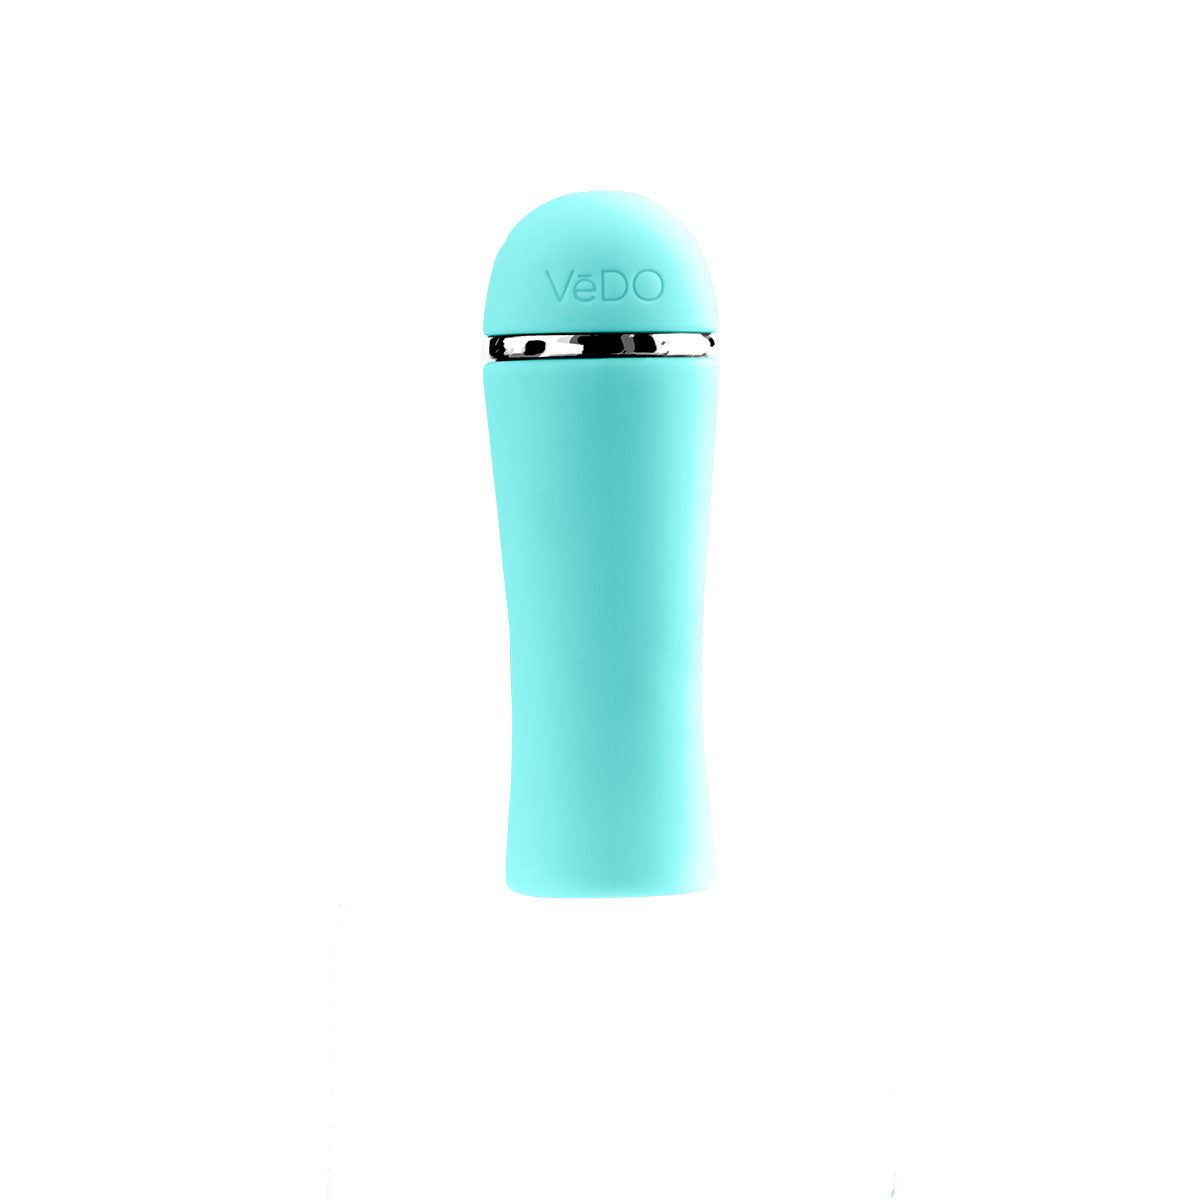 VeDO Liki: The Ultimate Tongue Vibrator Tease Me Turquoise